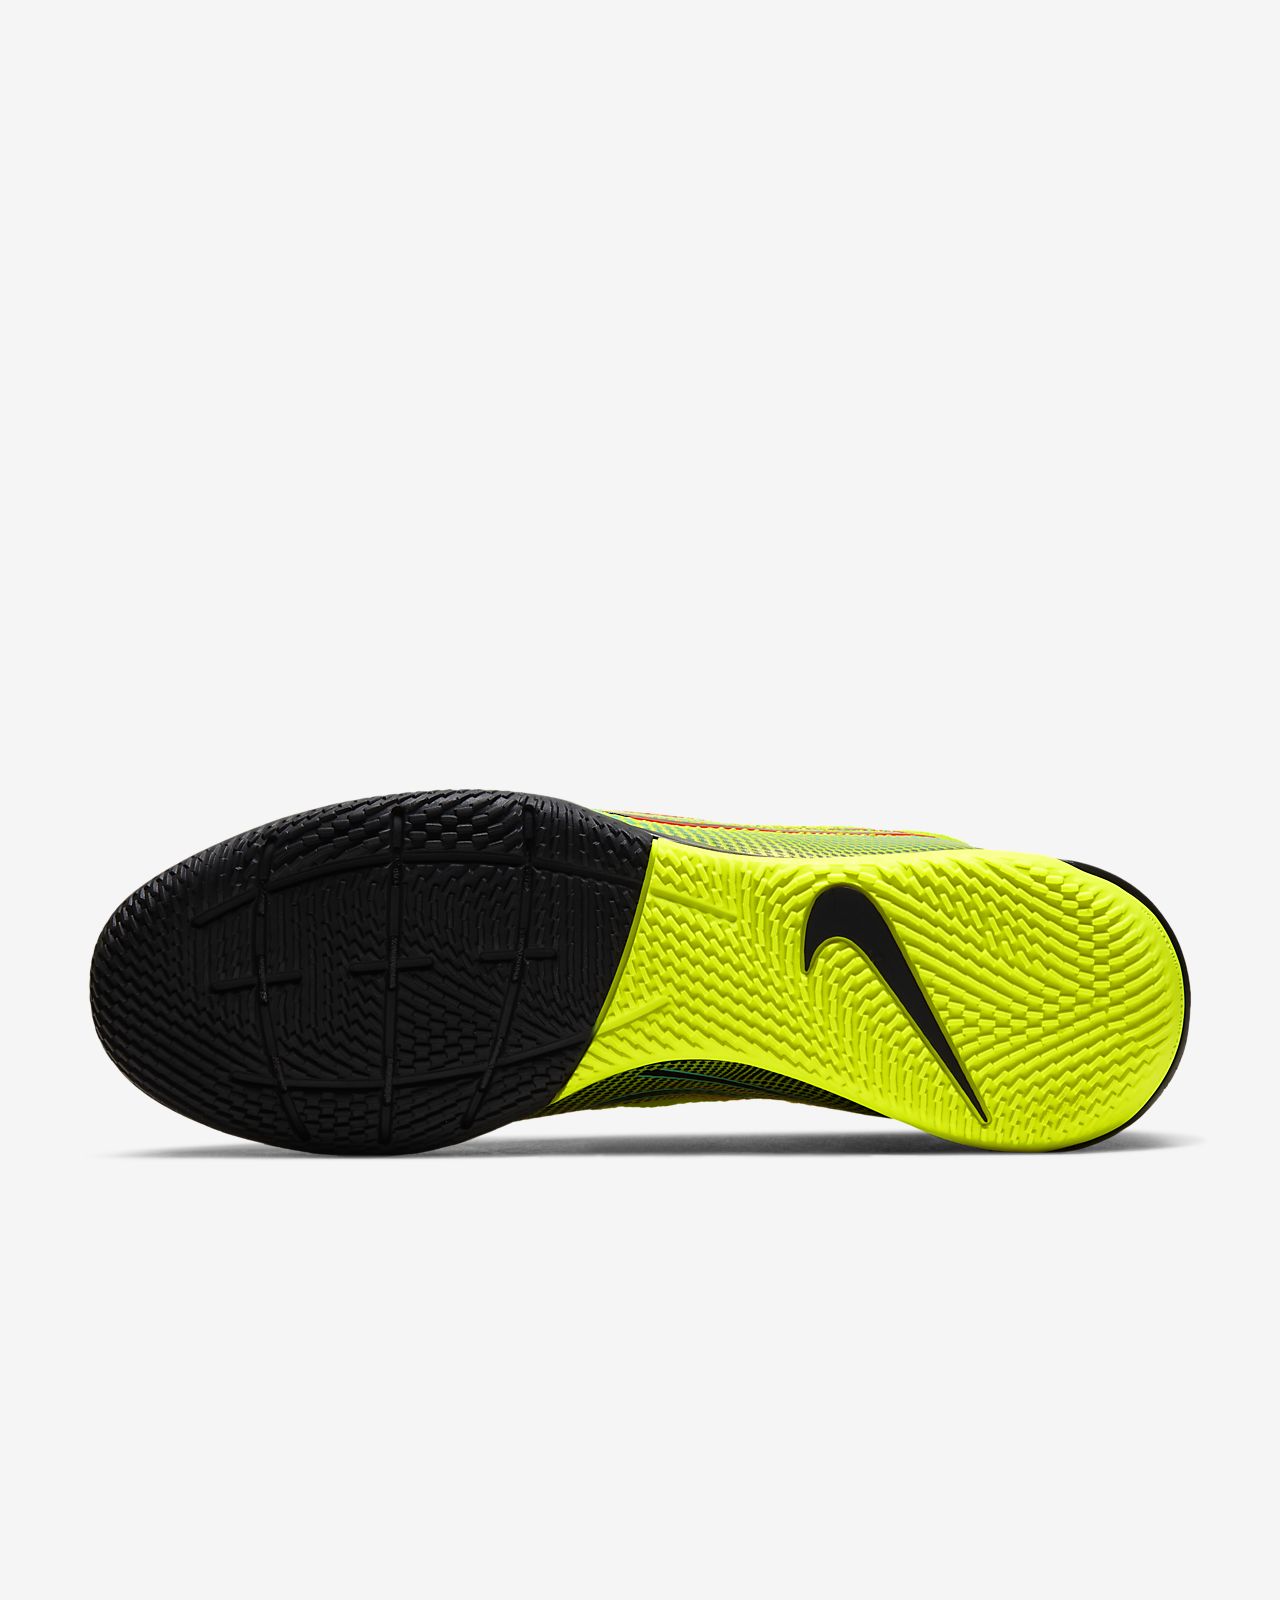 Nike Hommes Football-Chaussures cr7 Ronaldo Mercurial Superfly VI IC Halle NEUF